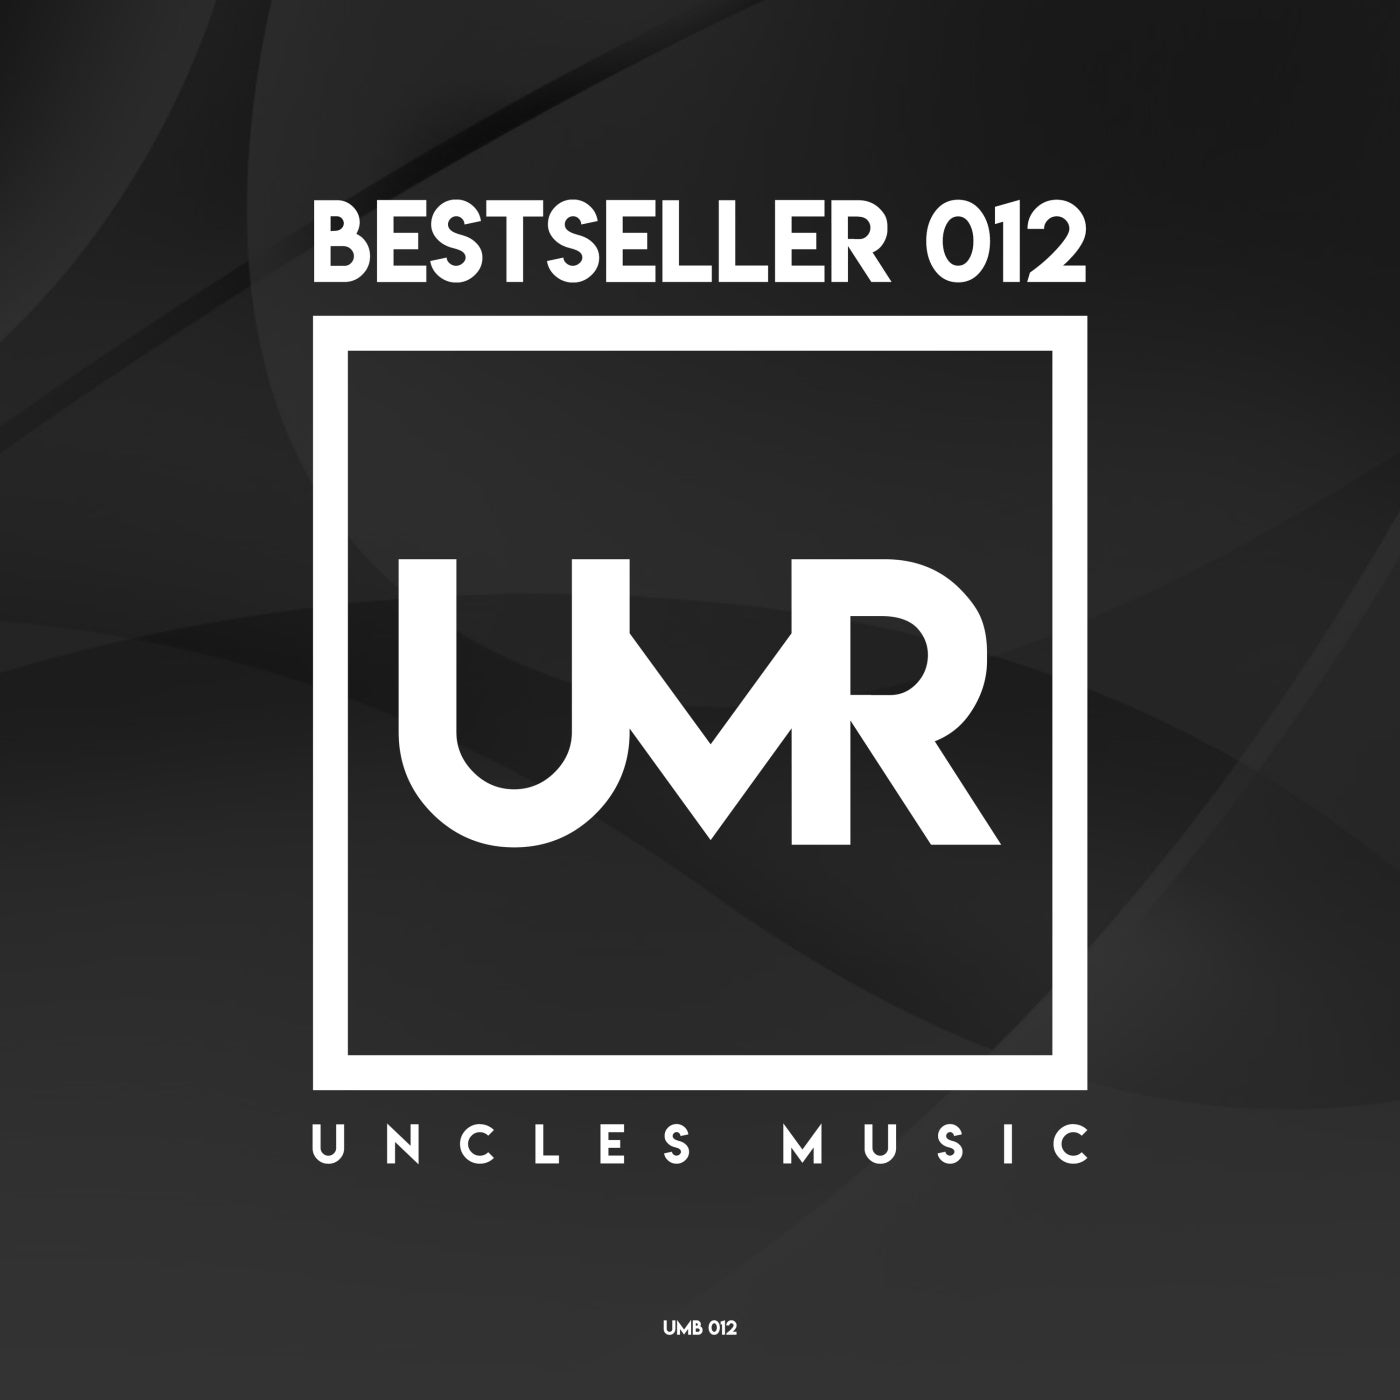 Uncles Music "Bestseller 012"